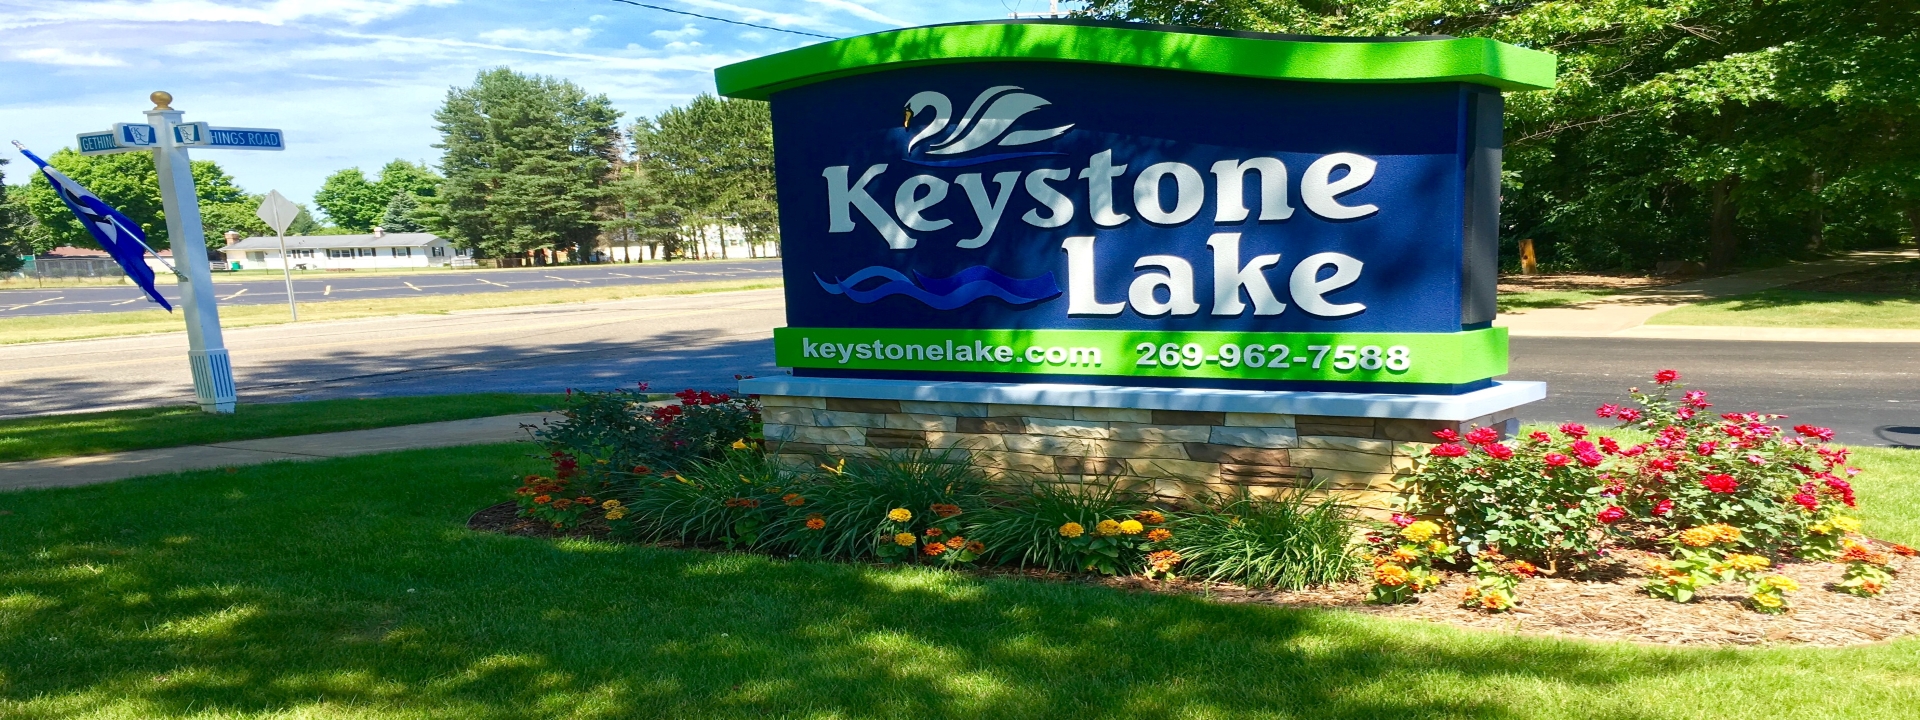 Keystone Lake sign